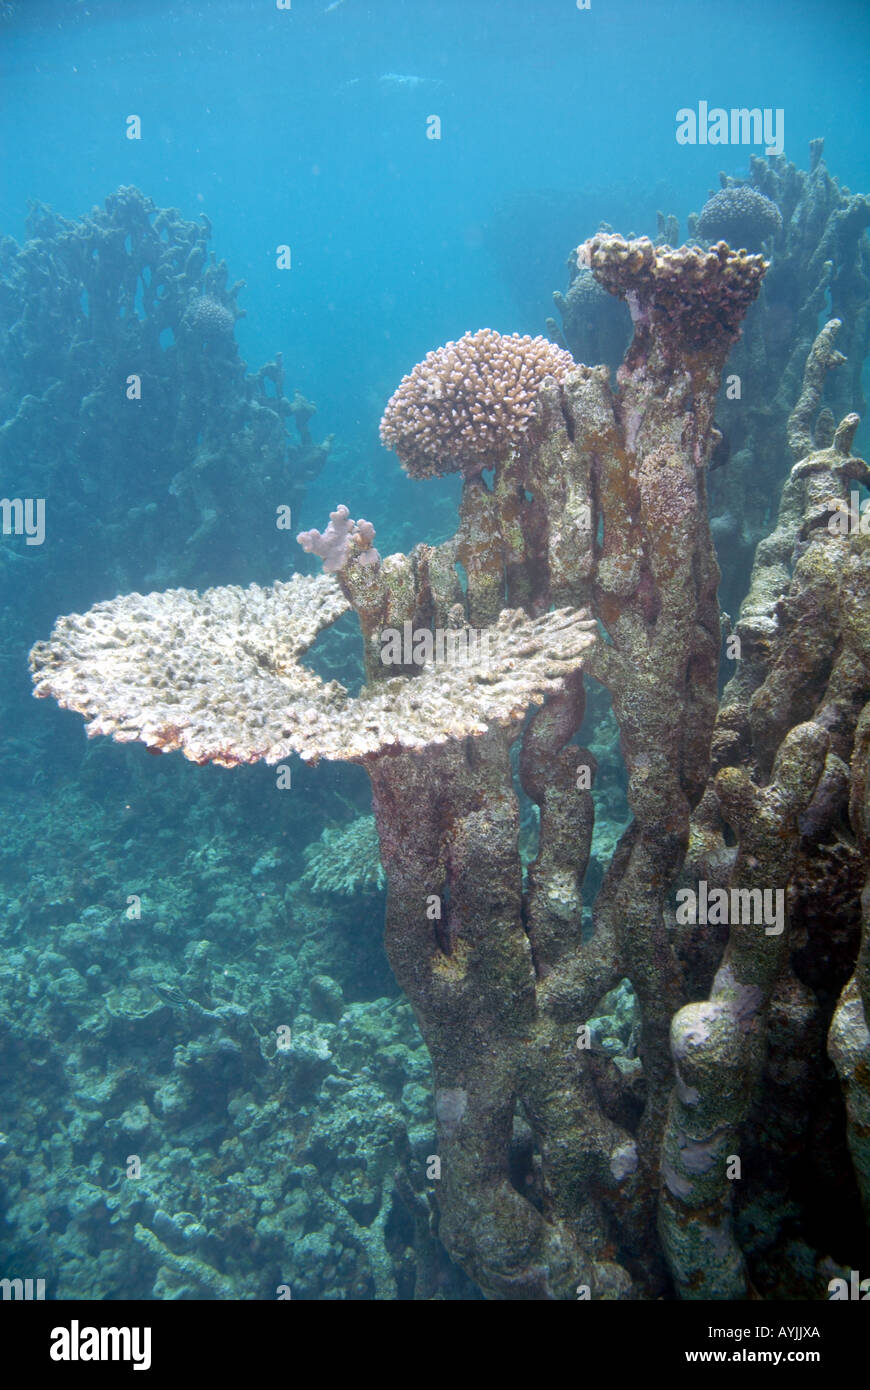 Coral reef struggling to recover from environmental disturbances Bill's Bay Ningaloo Marine Park Western Australia Stock Photo